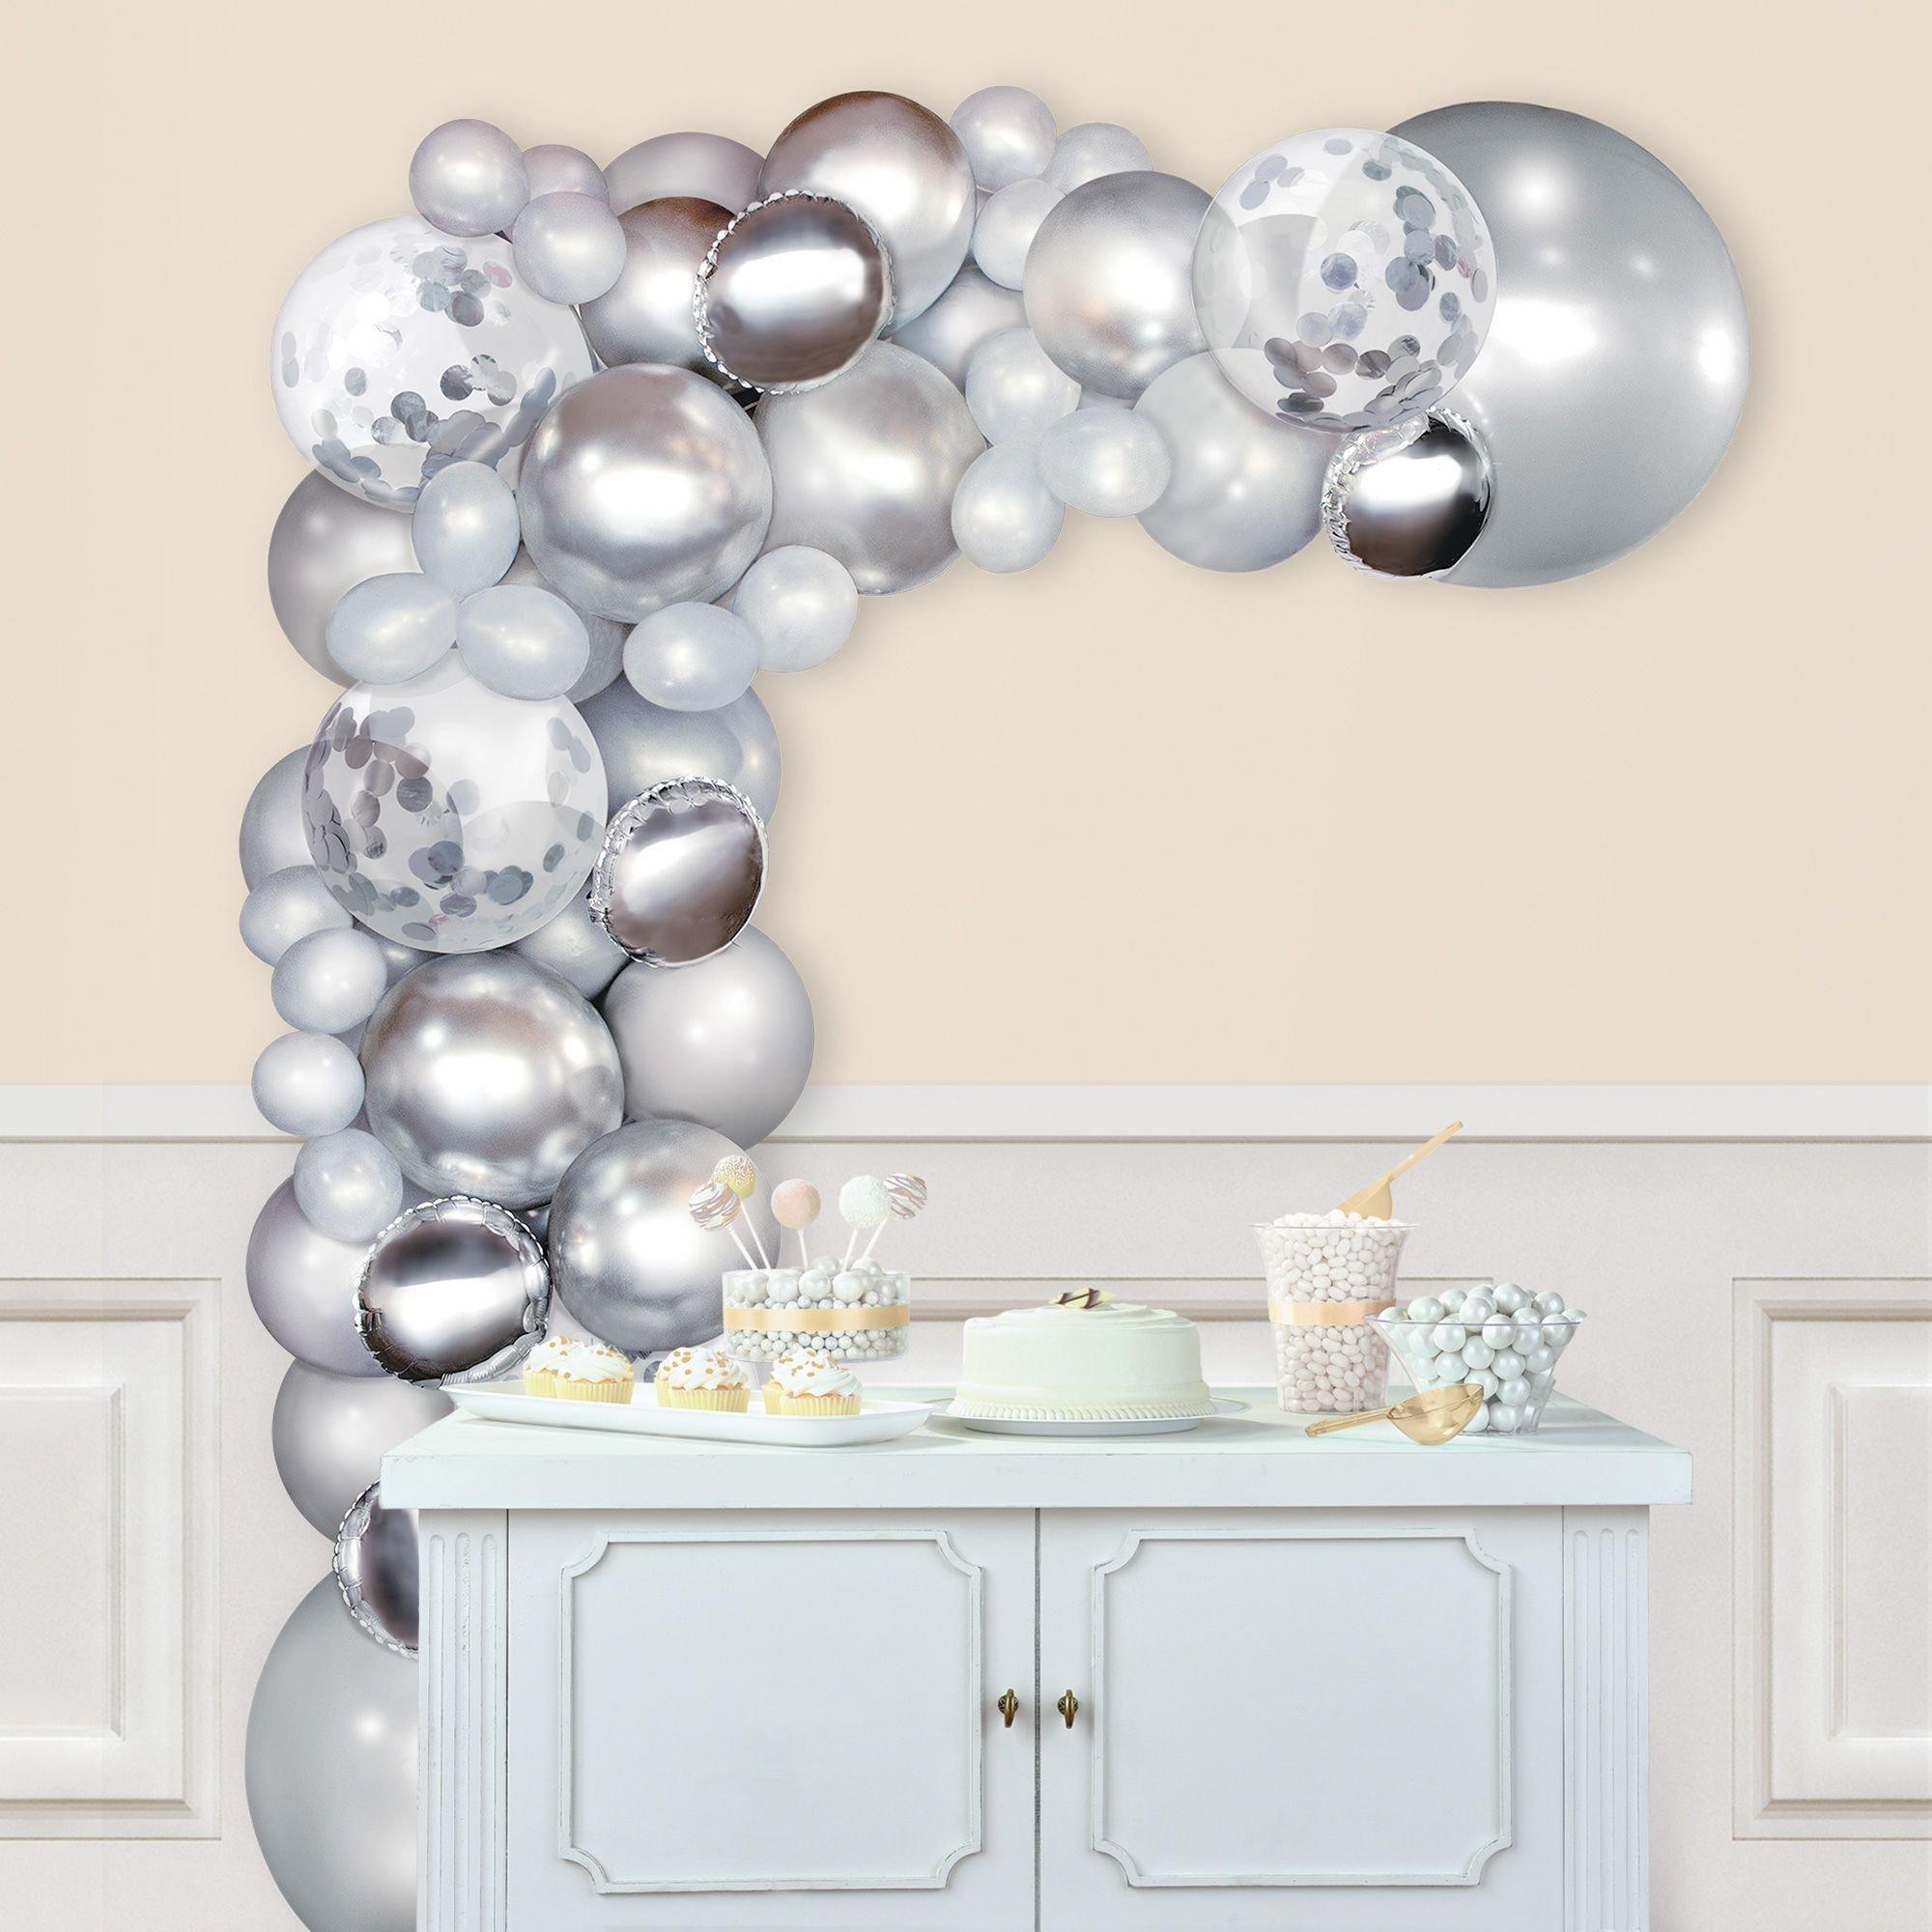 Glue Dots, Balloon Accessories - The Balloonery, Inc.